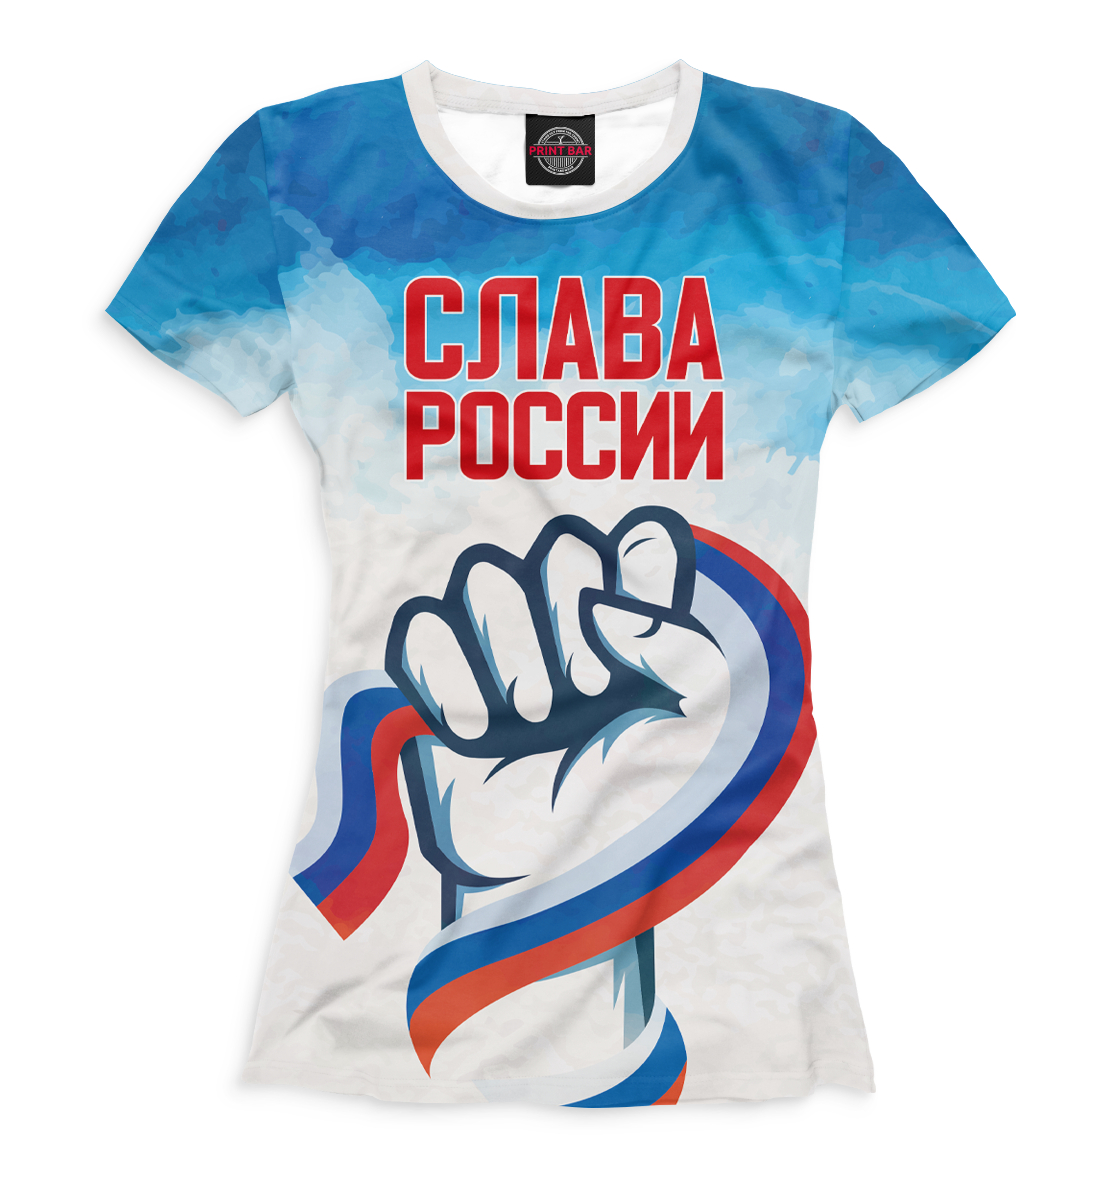 Футболка Слава России для женщин, артикул: VSY-890318-fut-1mp